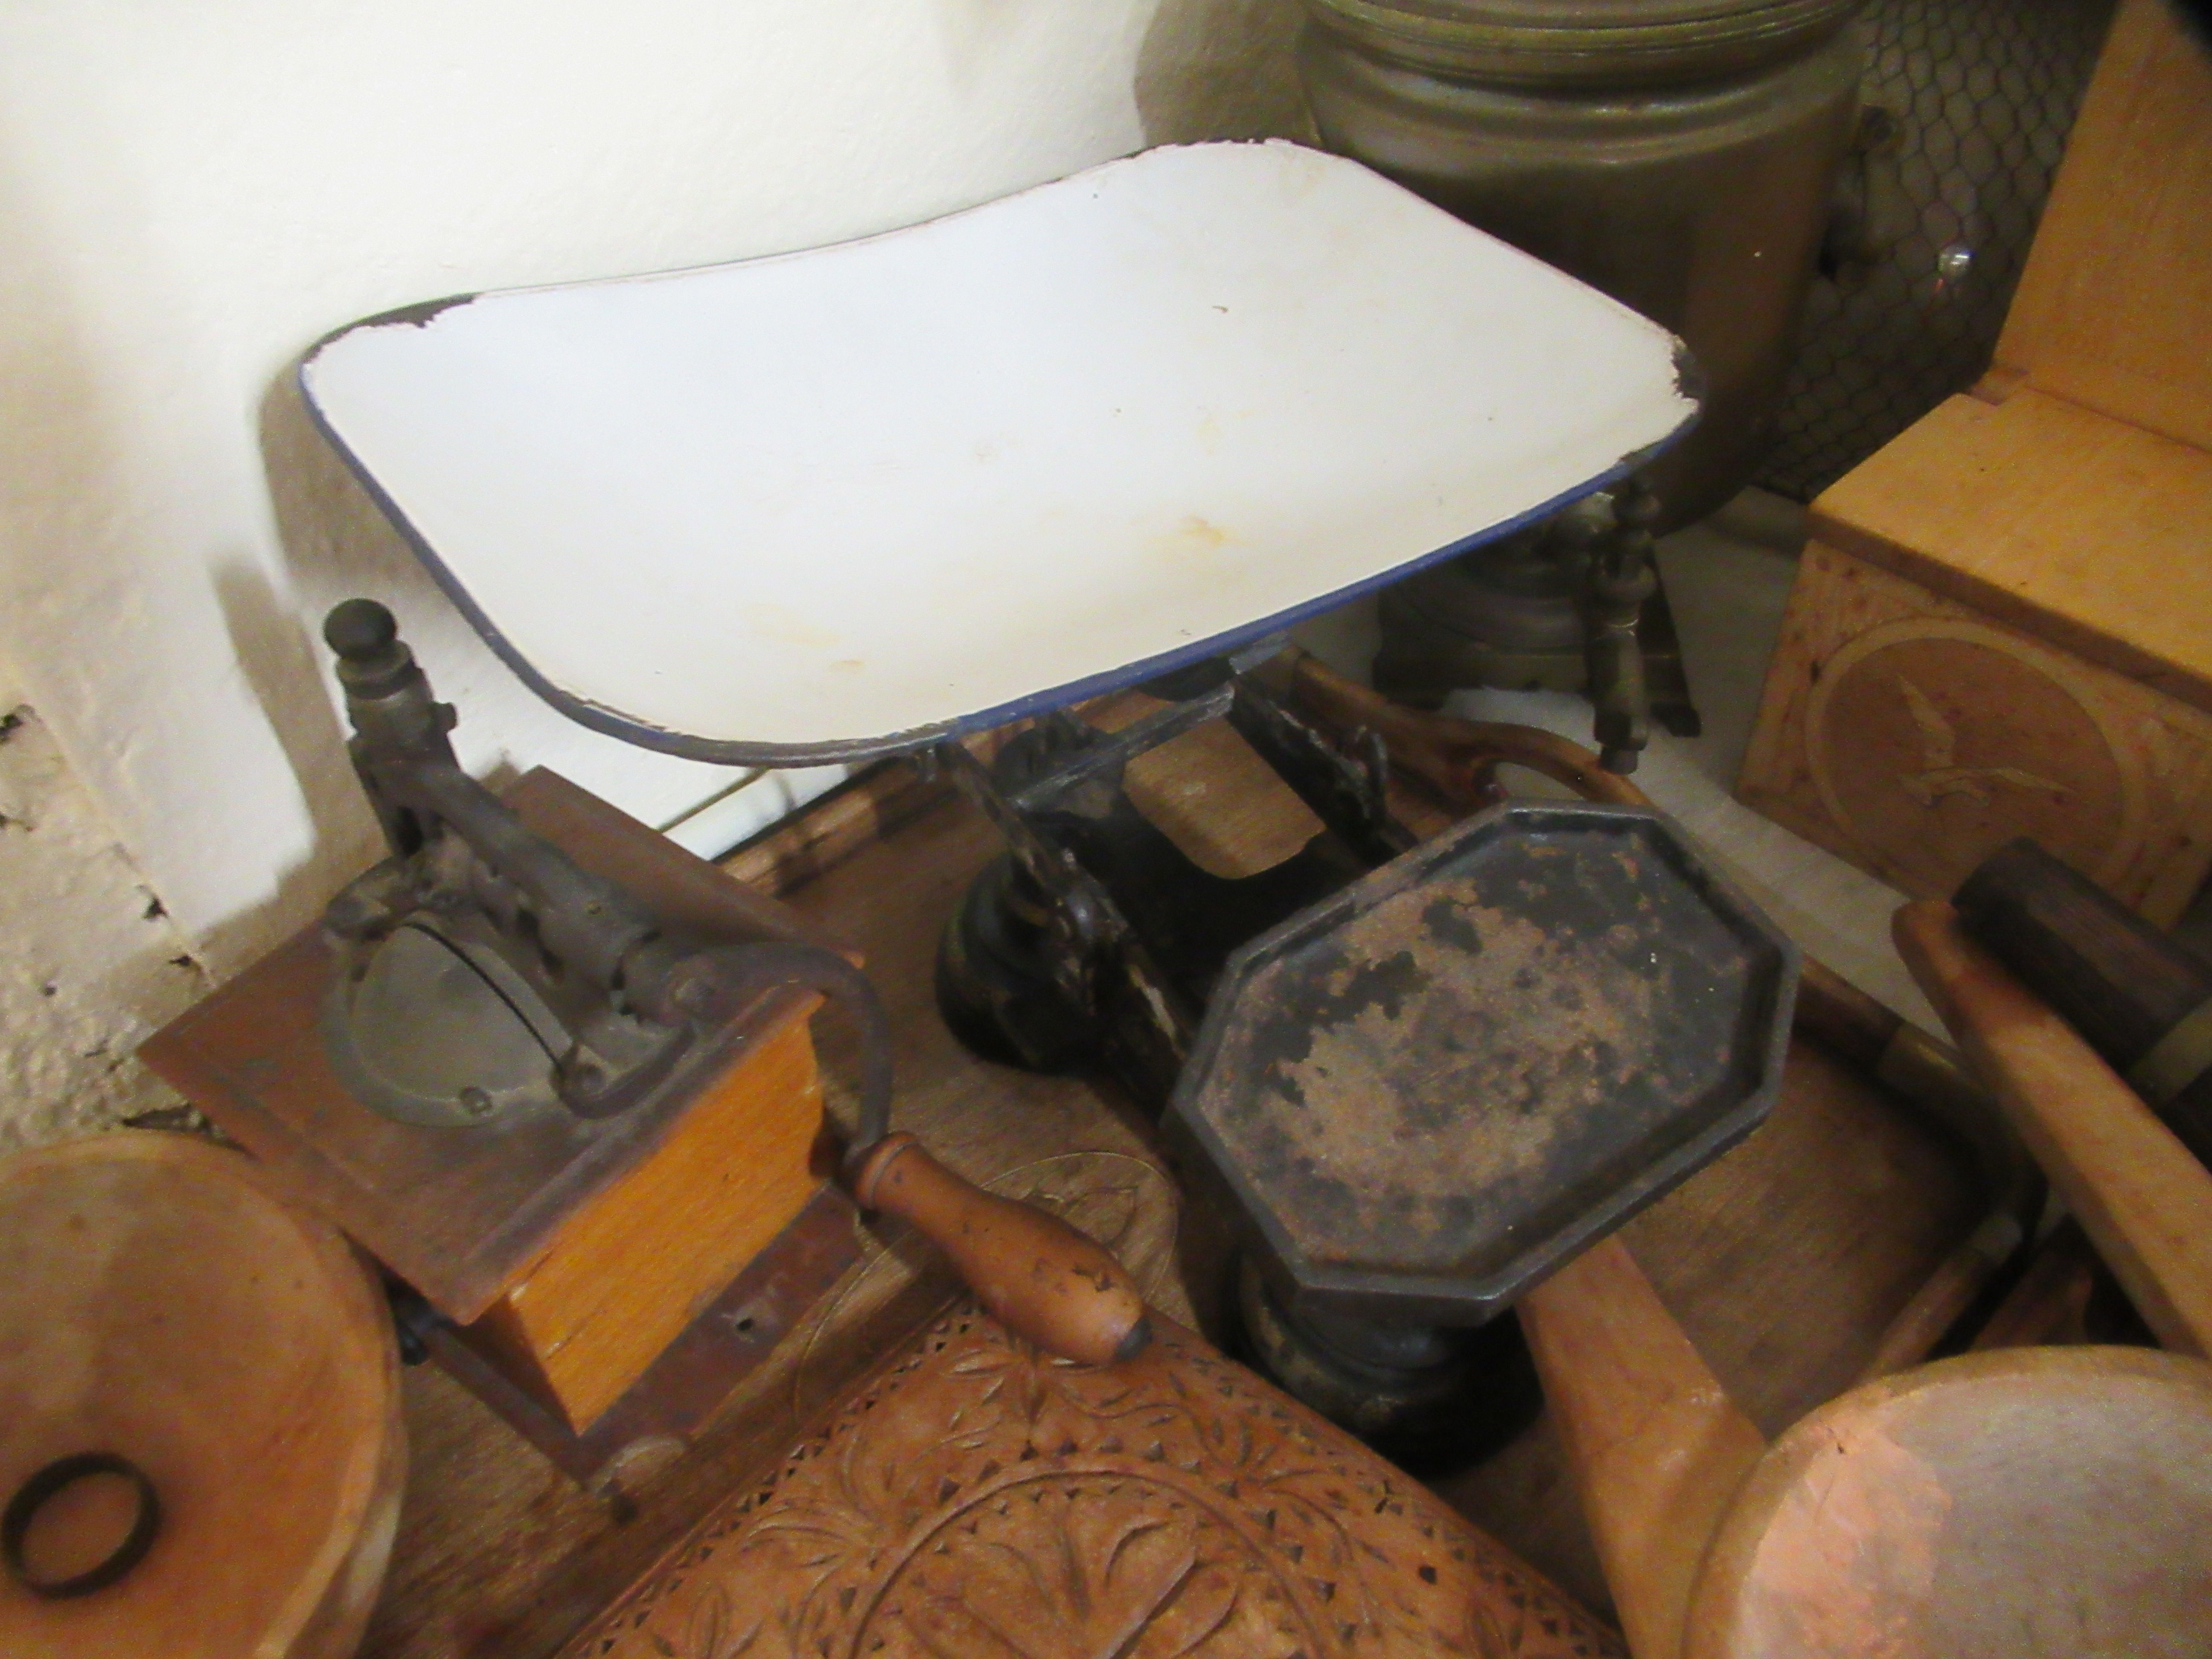 Wooden implements and vintage kitchen bygones - Image 5 of 7